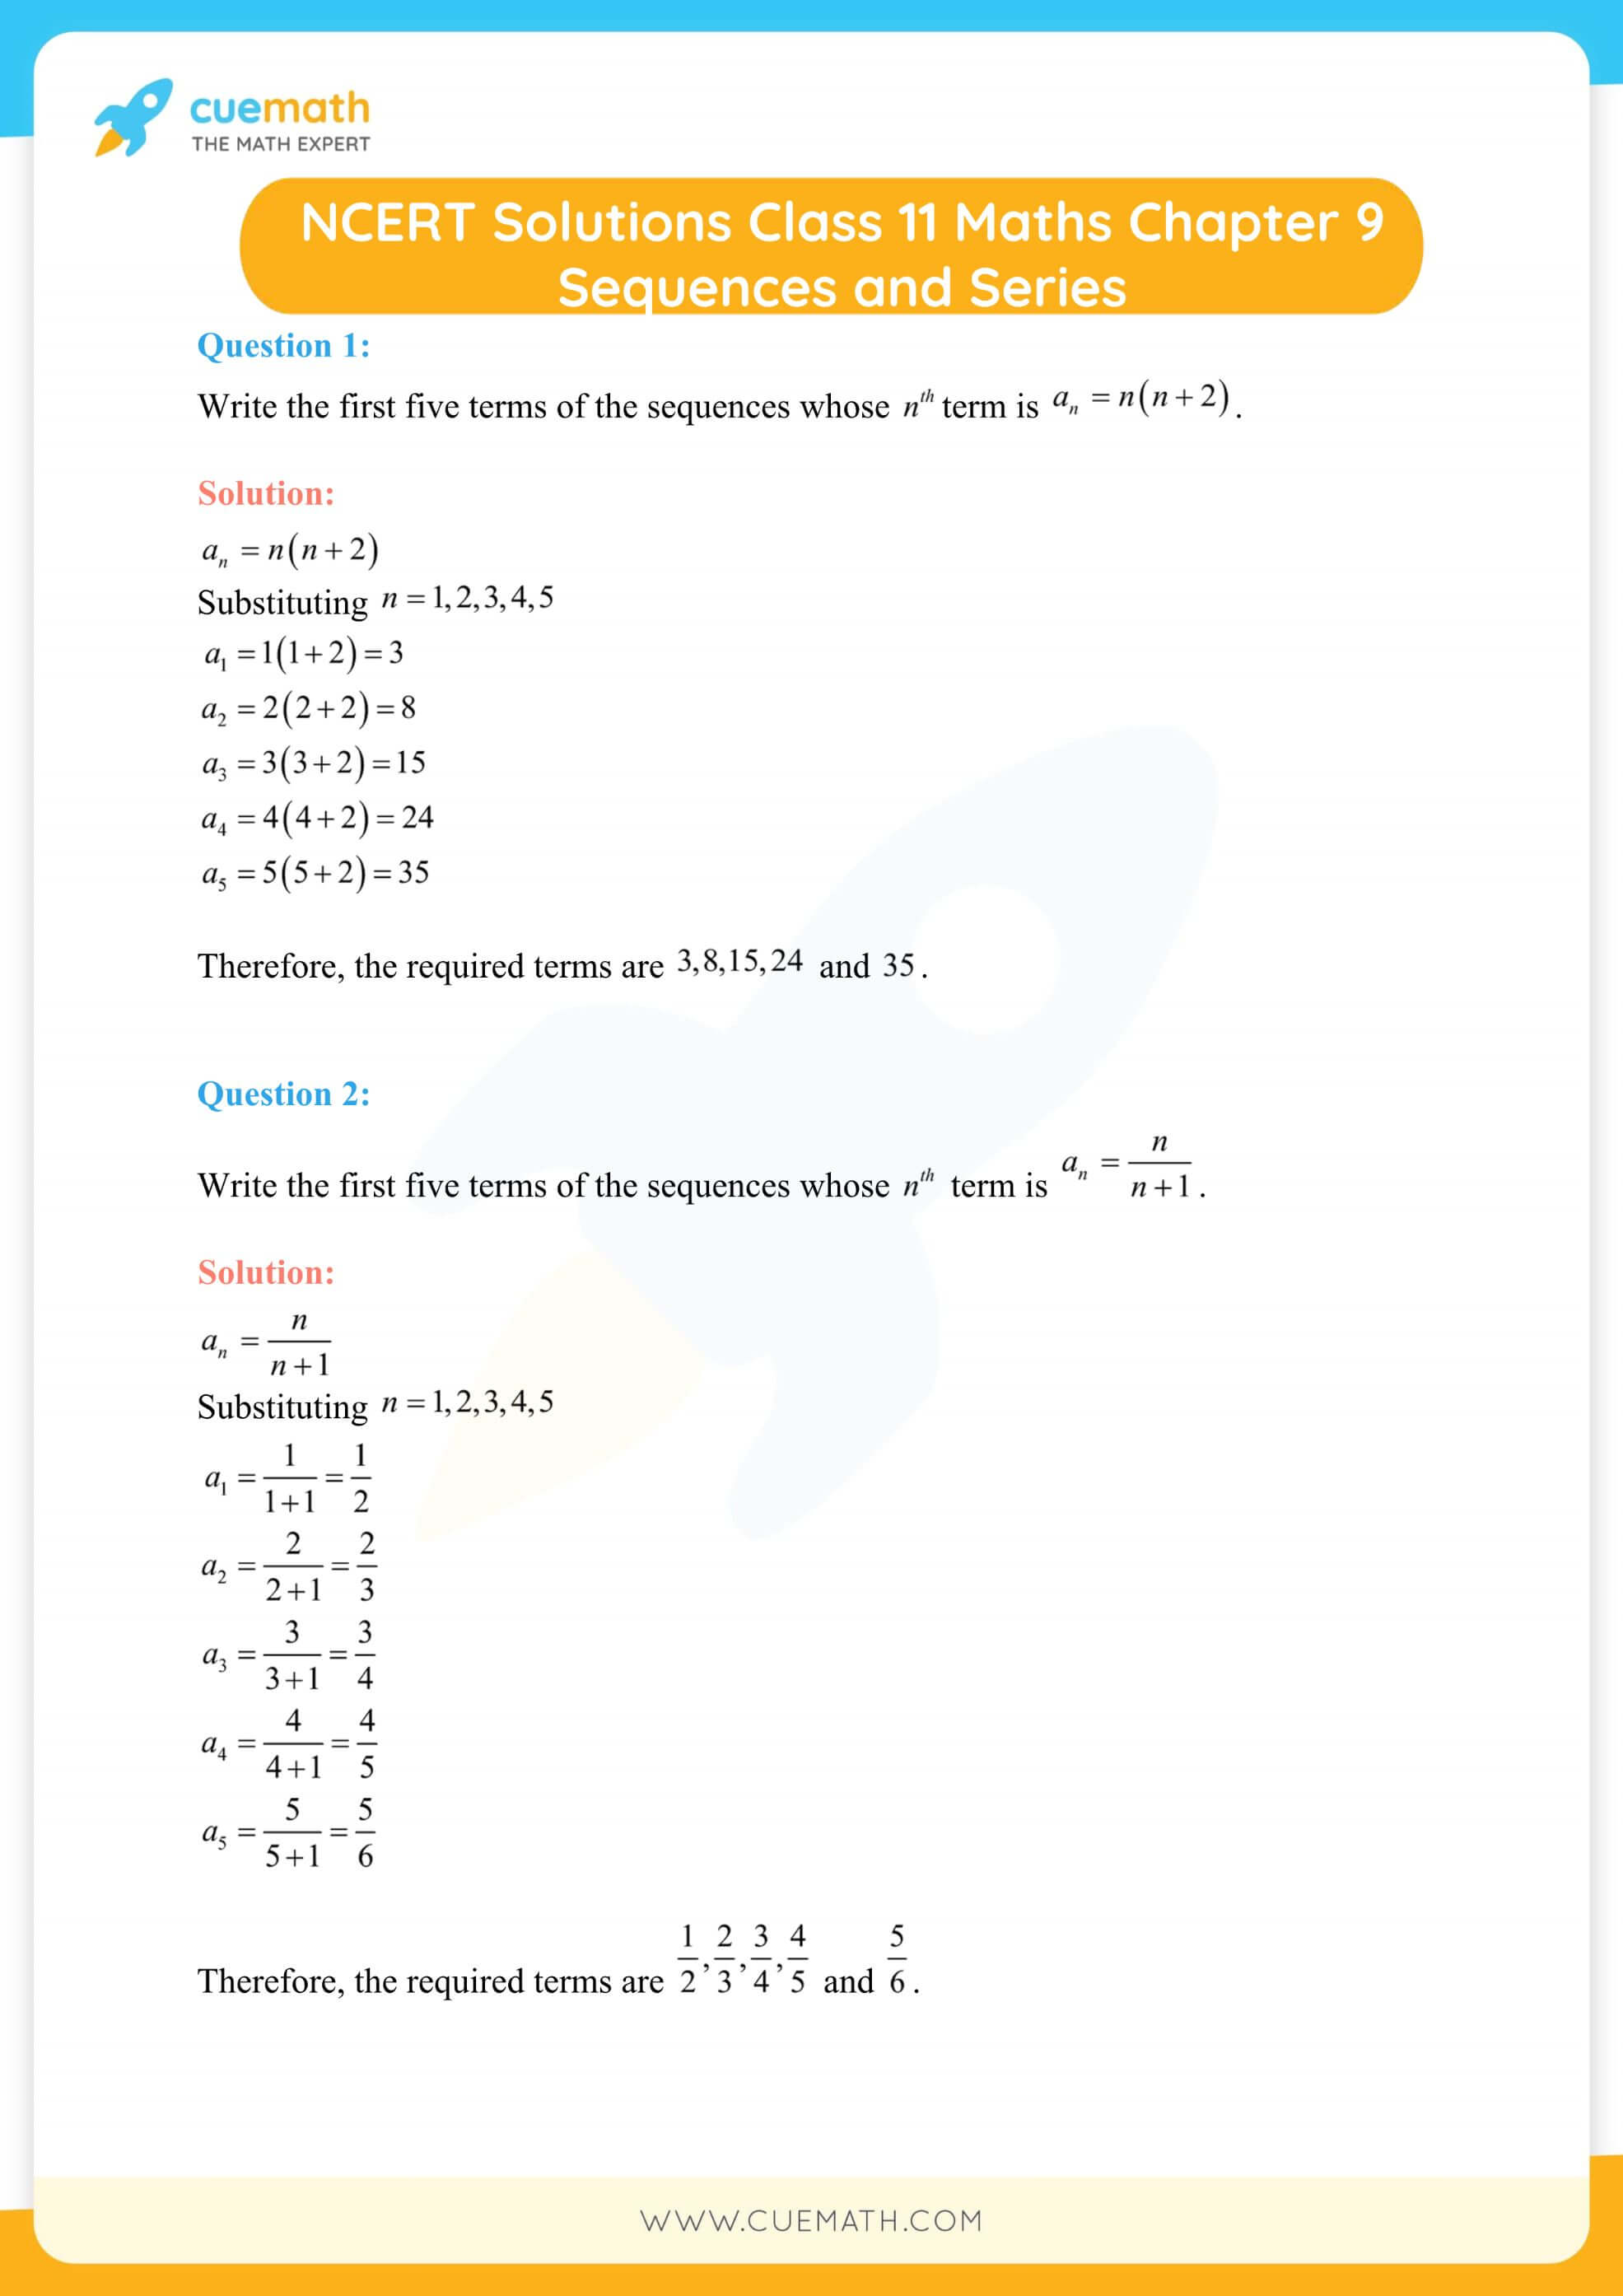 NCERT Solutions Class 11 Maths Chapter 9 Exercise 9.1 1